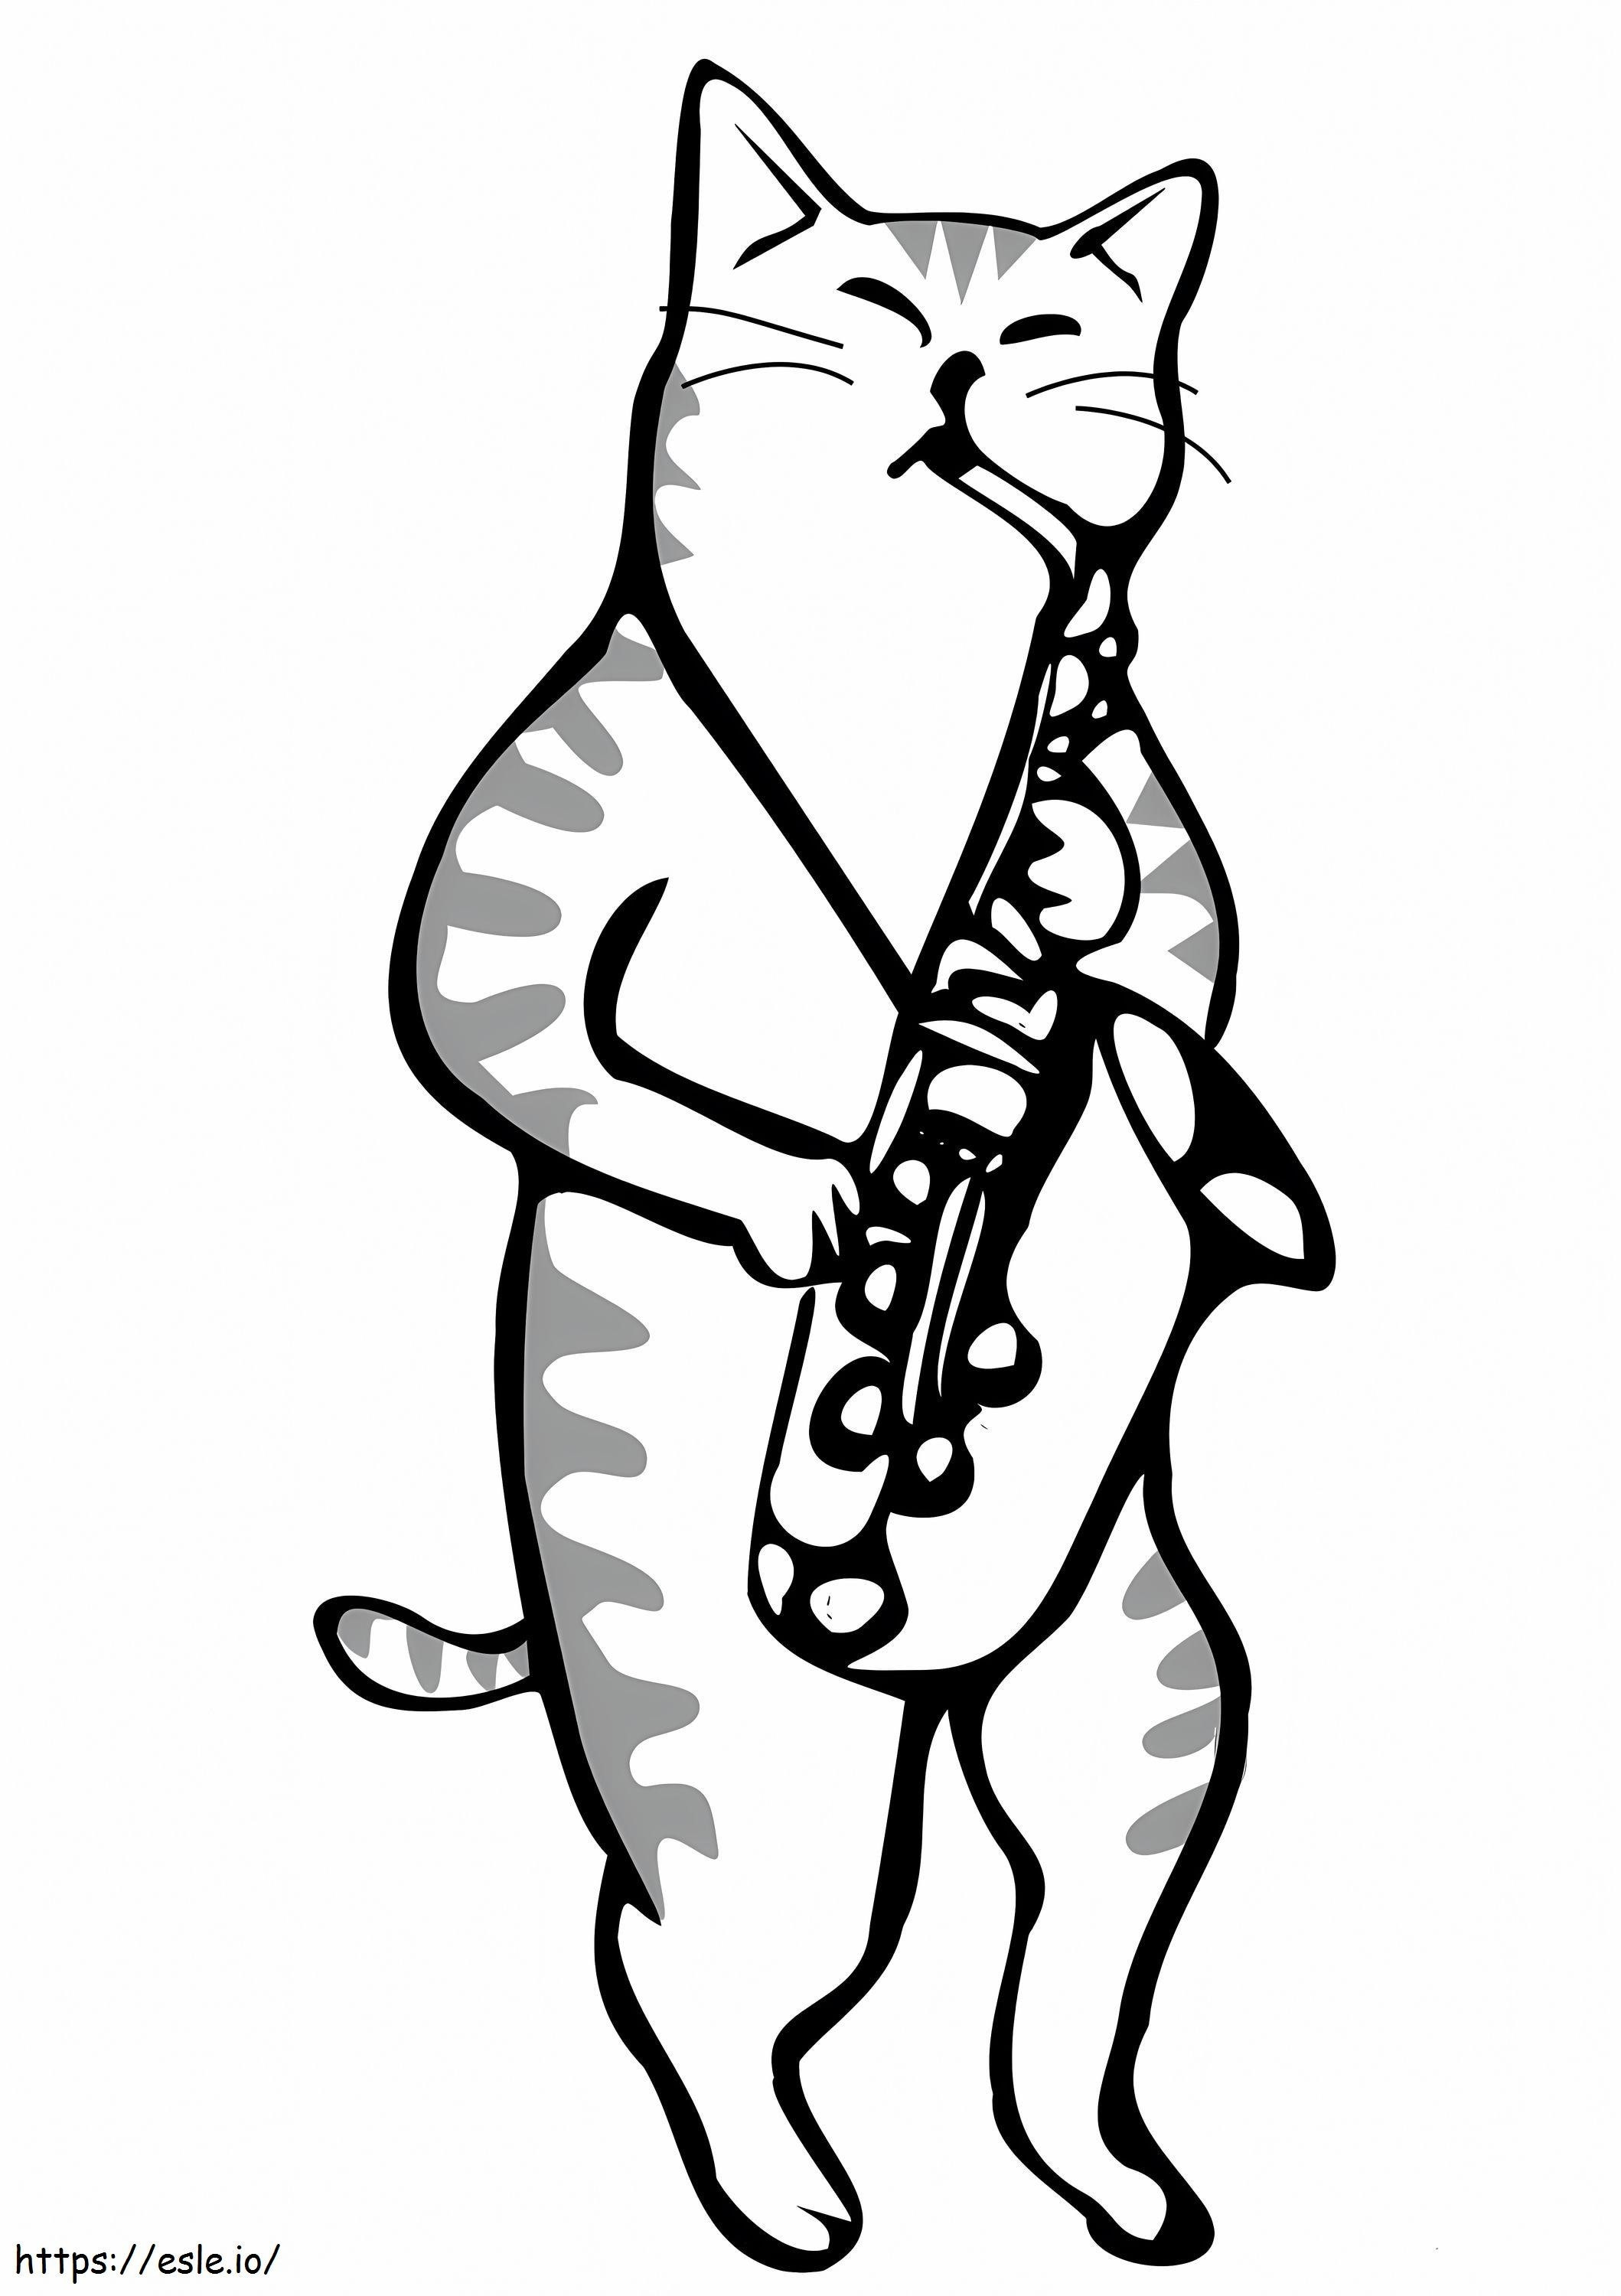 1542094873 Kat speelt saxofoon kleurplaat kleurplaat